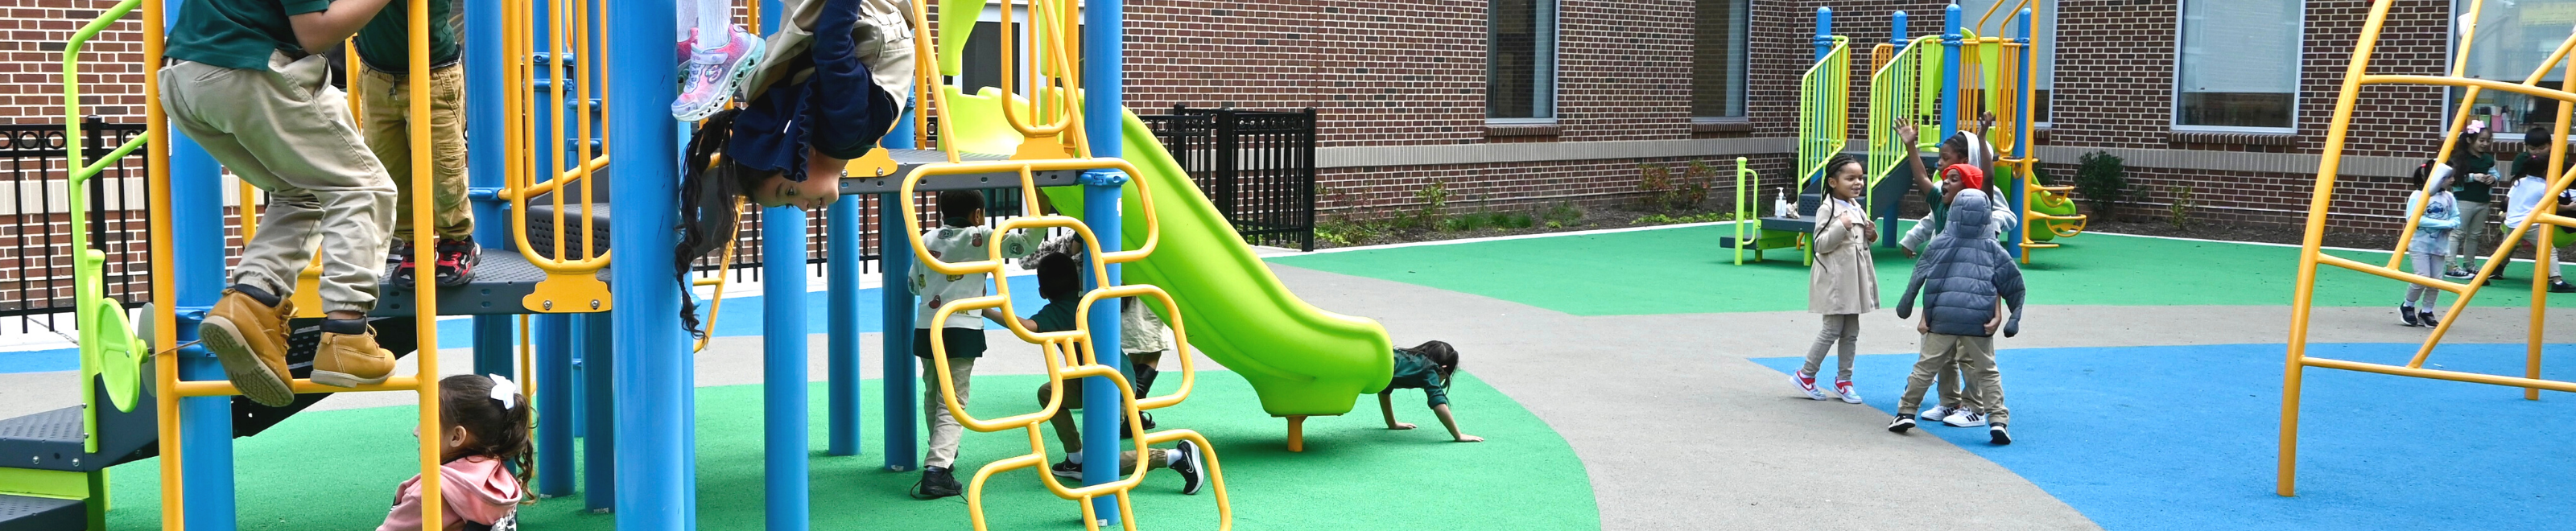 Playground at School